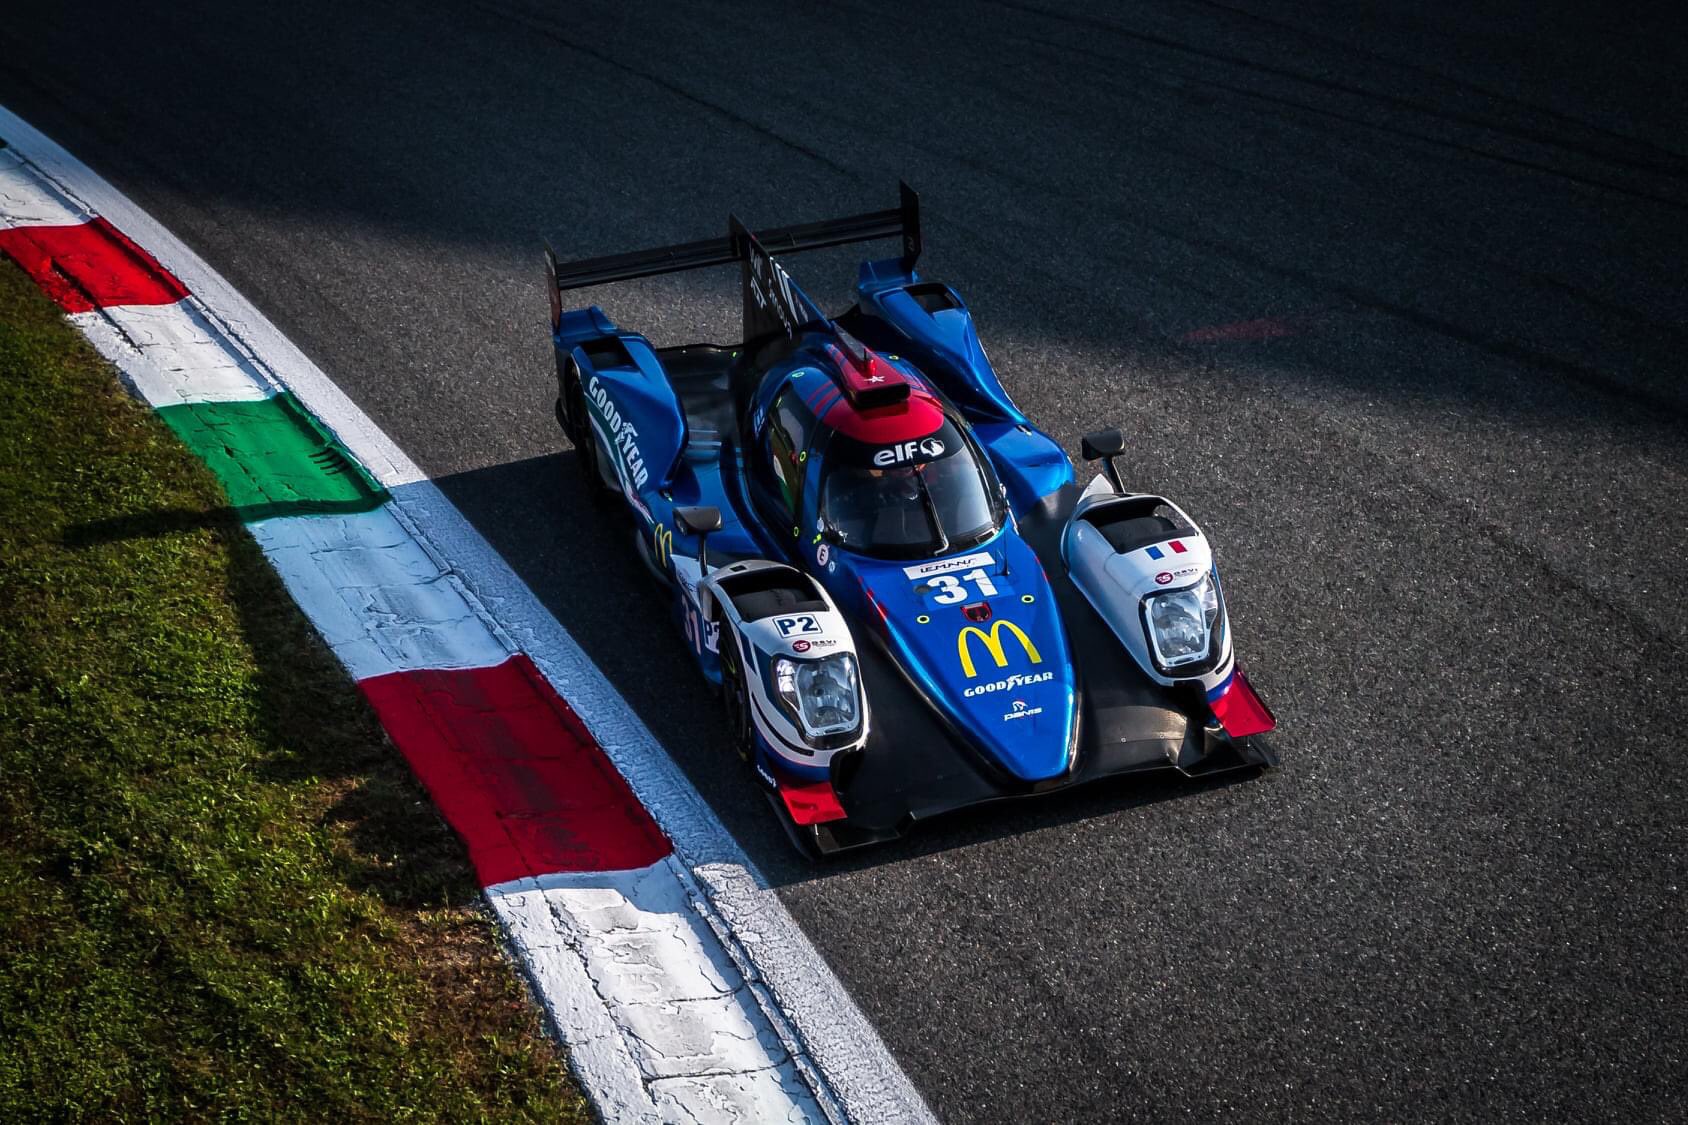 Panis Racing vence as 4 Horas de Monza